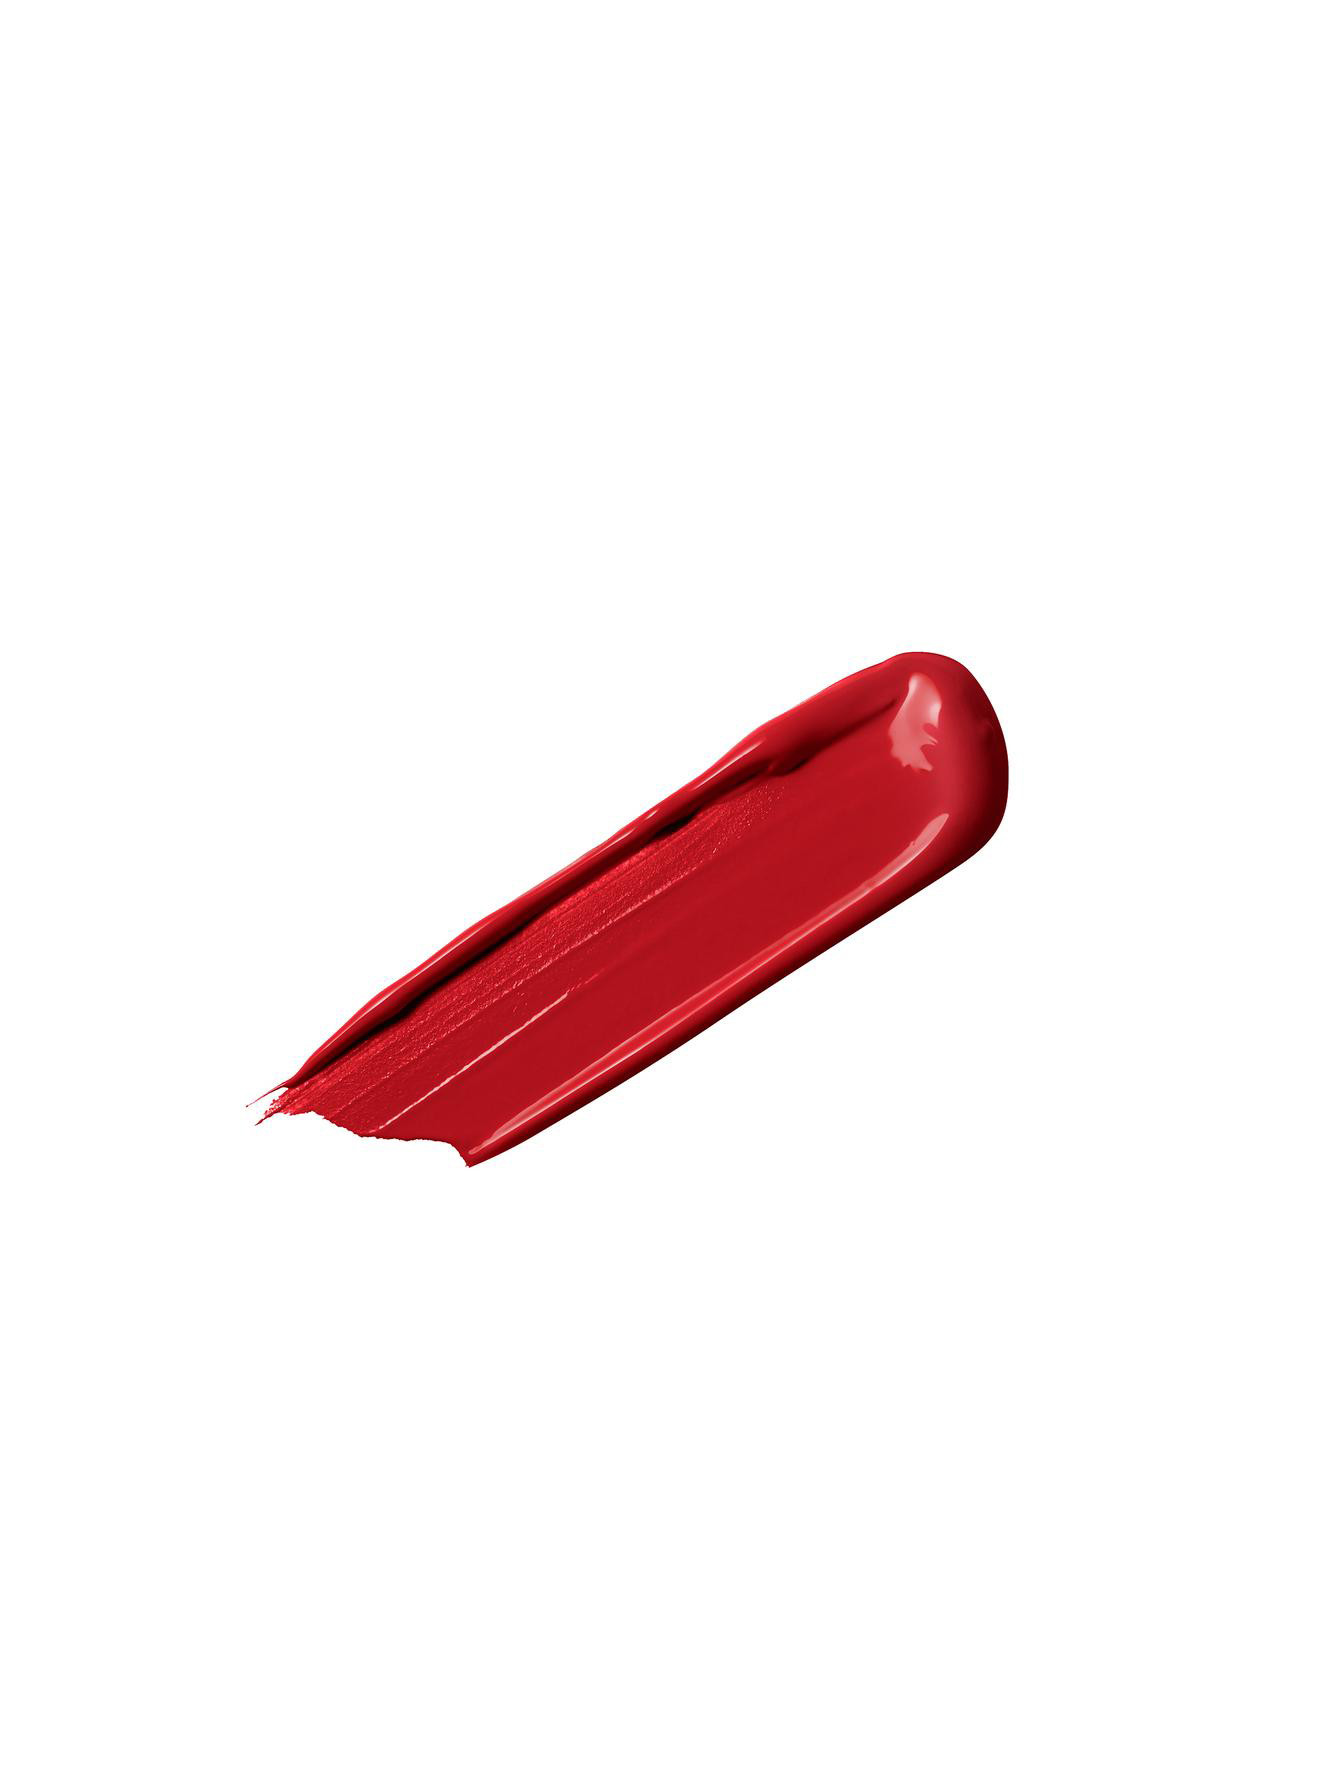 Ультрапигментированная губная помада L'Absolu Rouge, 01, 3 г - Обтравка1